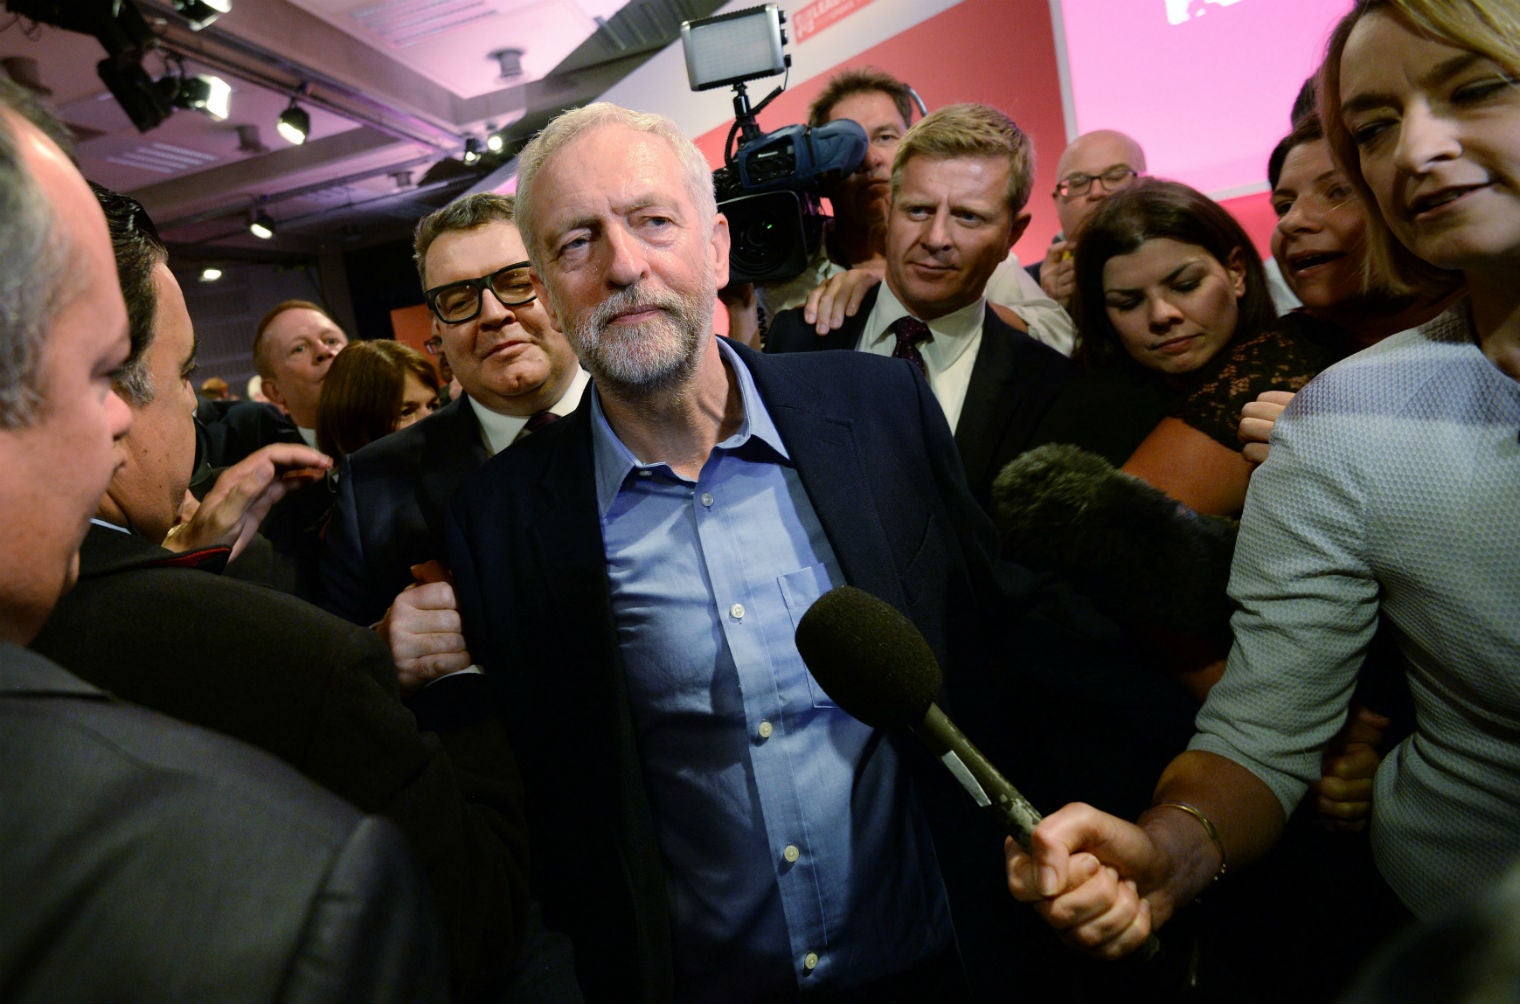 Jeremy Corbyn was elected by a landslide majority on Saturday